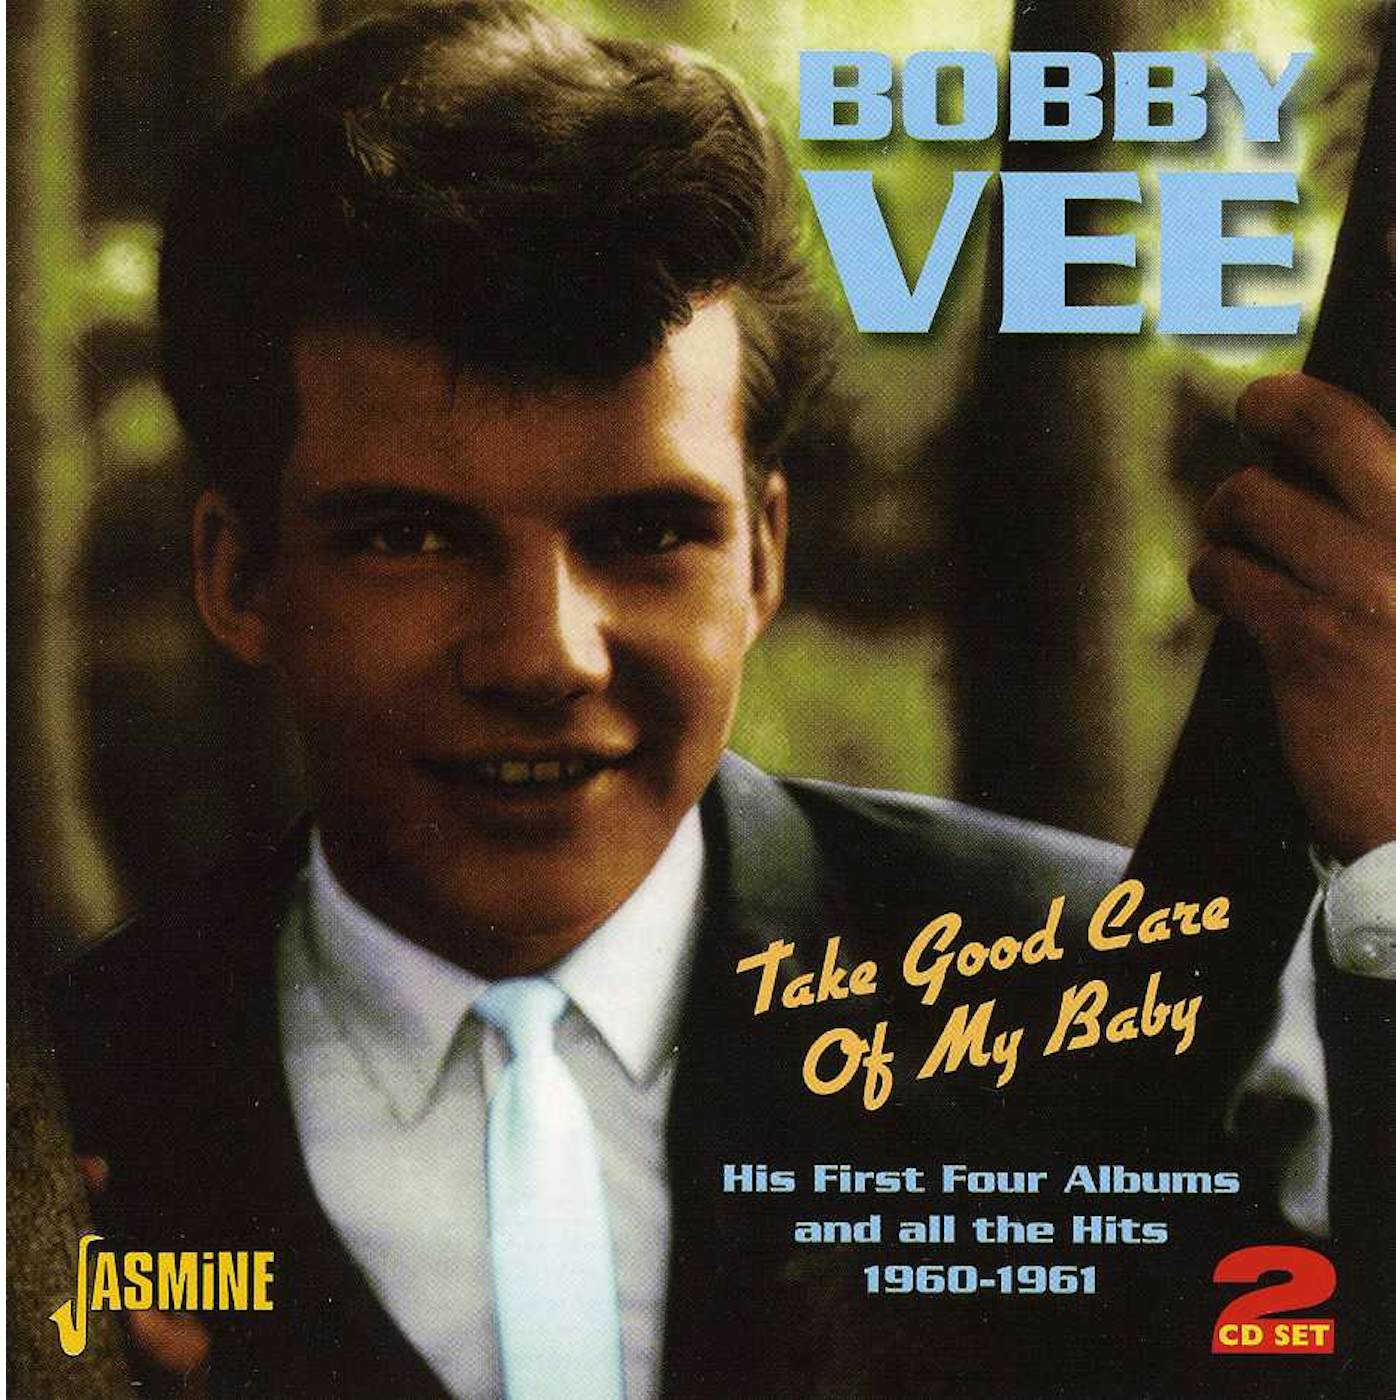 Bobby Vee TAKE GOOD CARE OF MY BABY CD